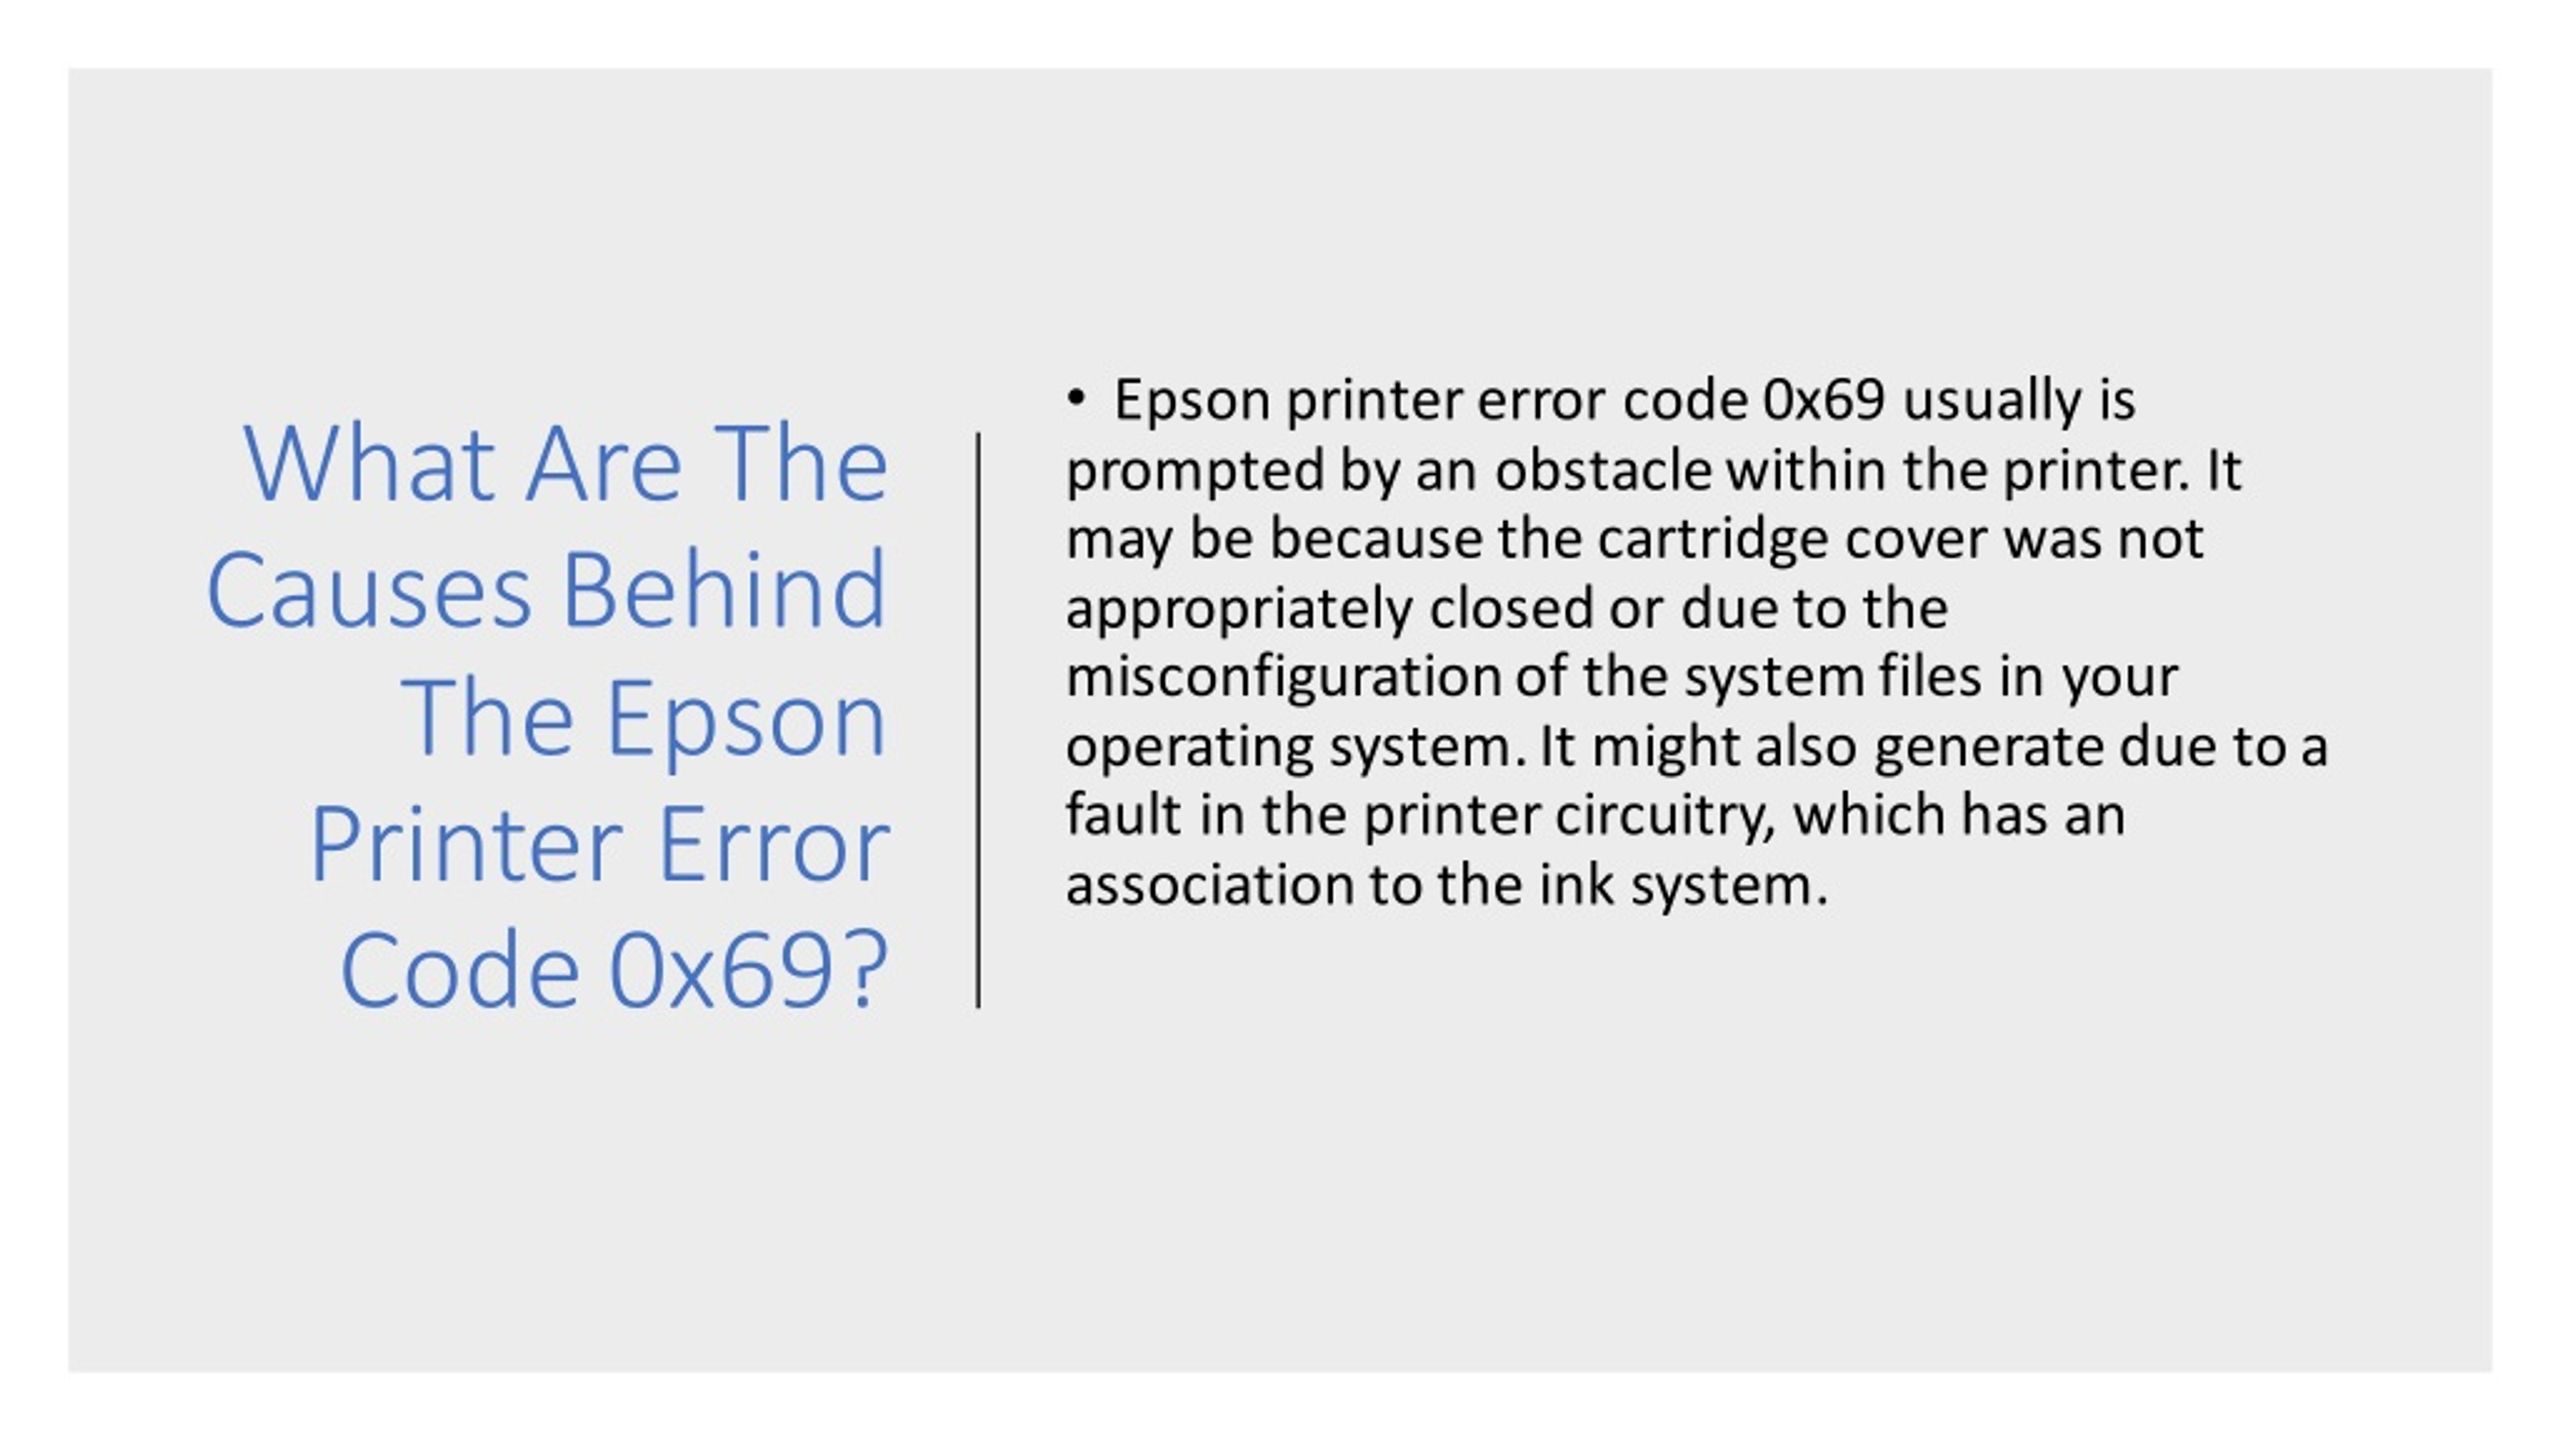 Ppt Steps To Fix Epson Printer Error Code 0x69 Powerpoint Presentation Id8339337 0516